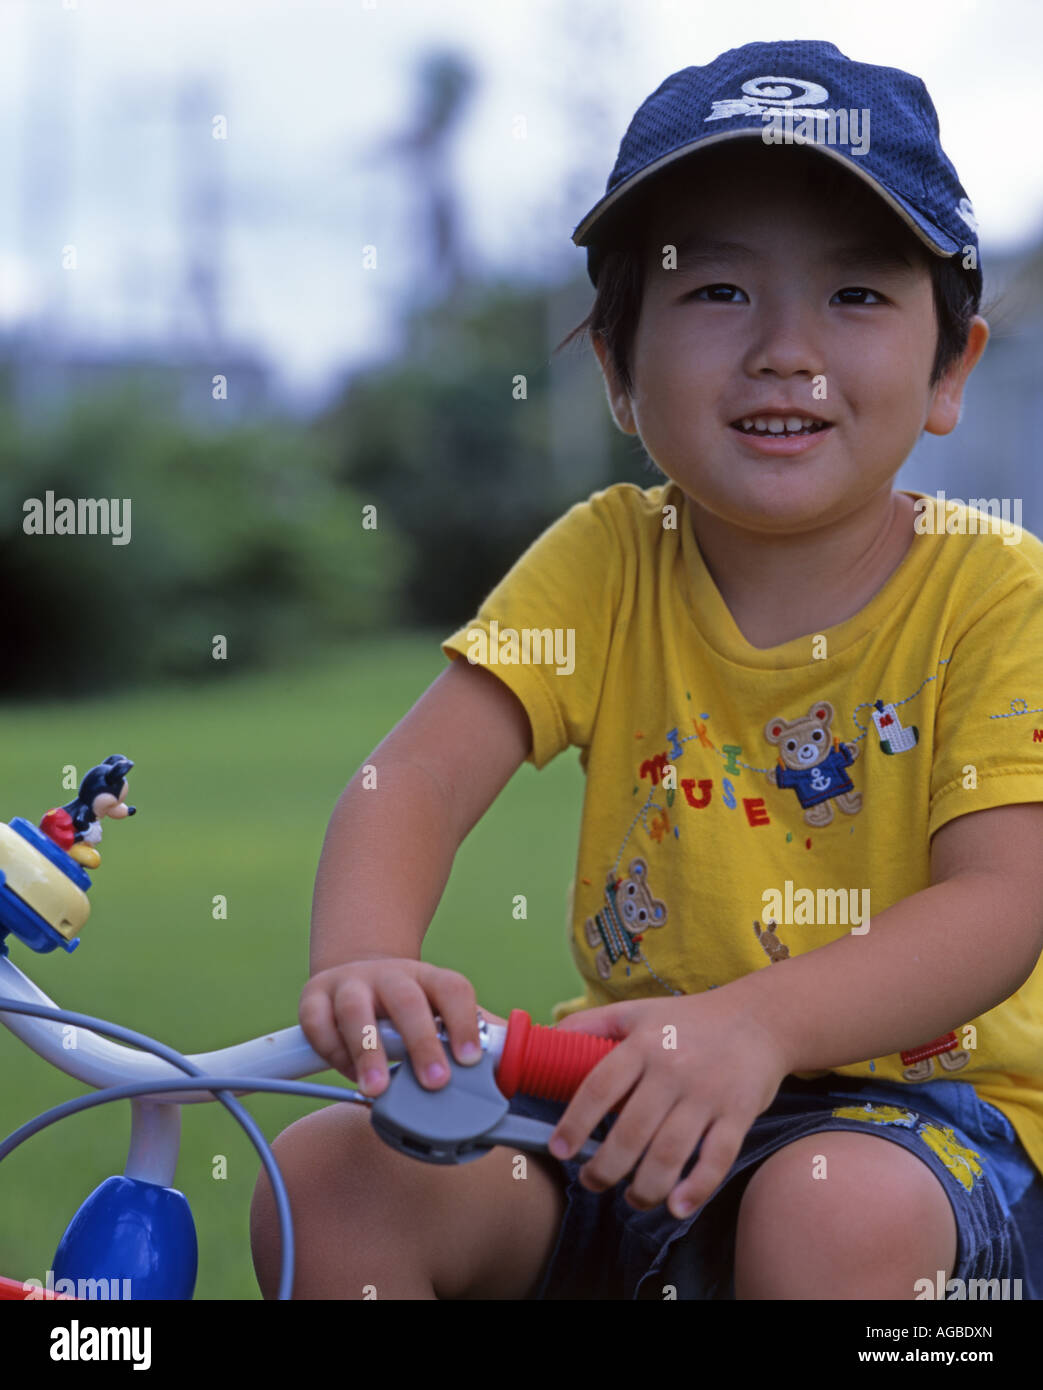 Okinawa Young Boy am Fahrrad lächelnd Stockfoto